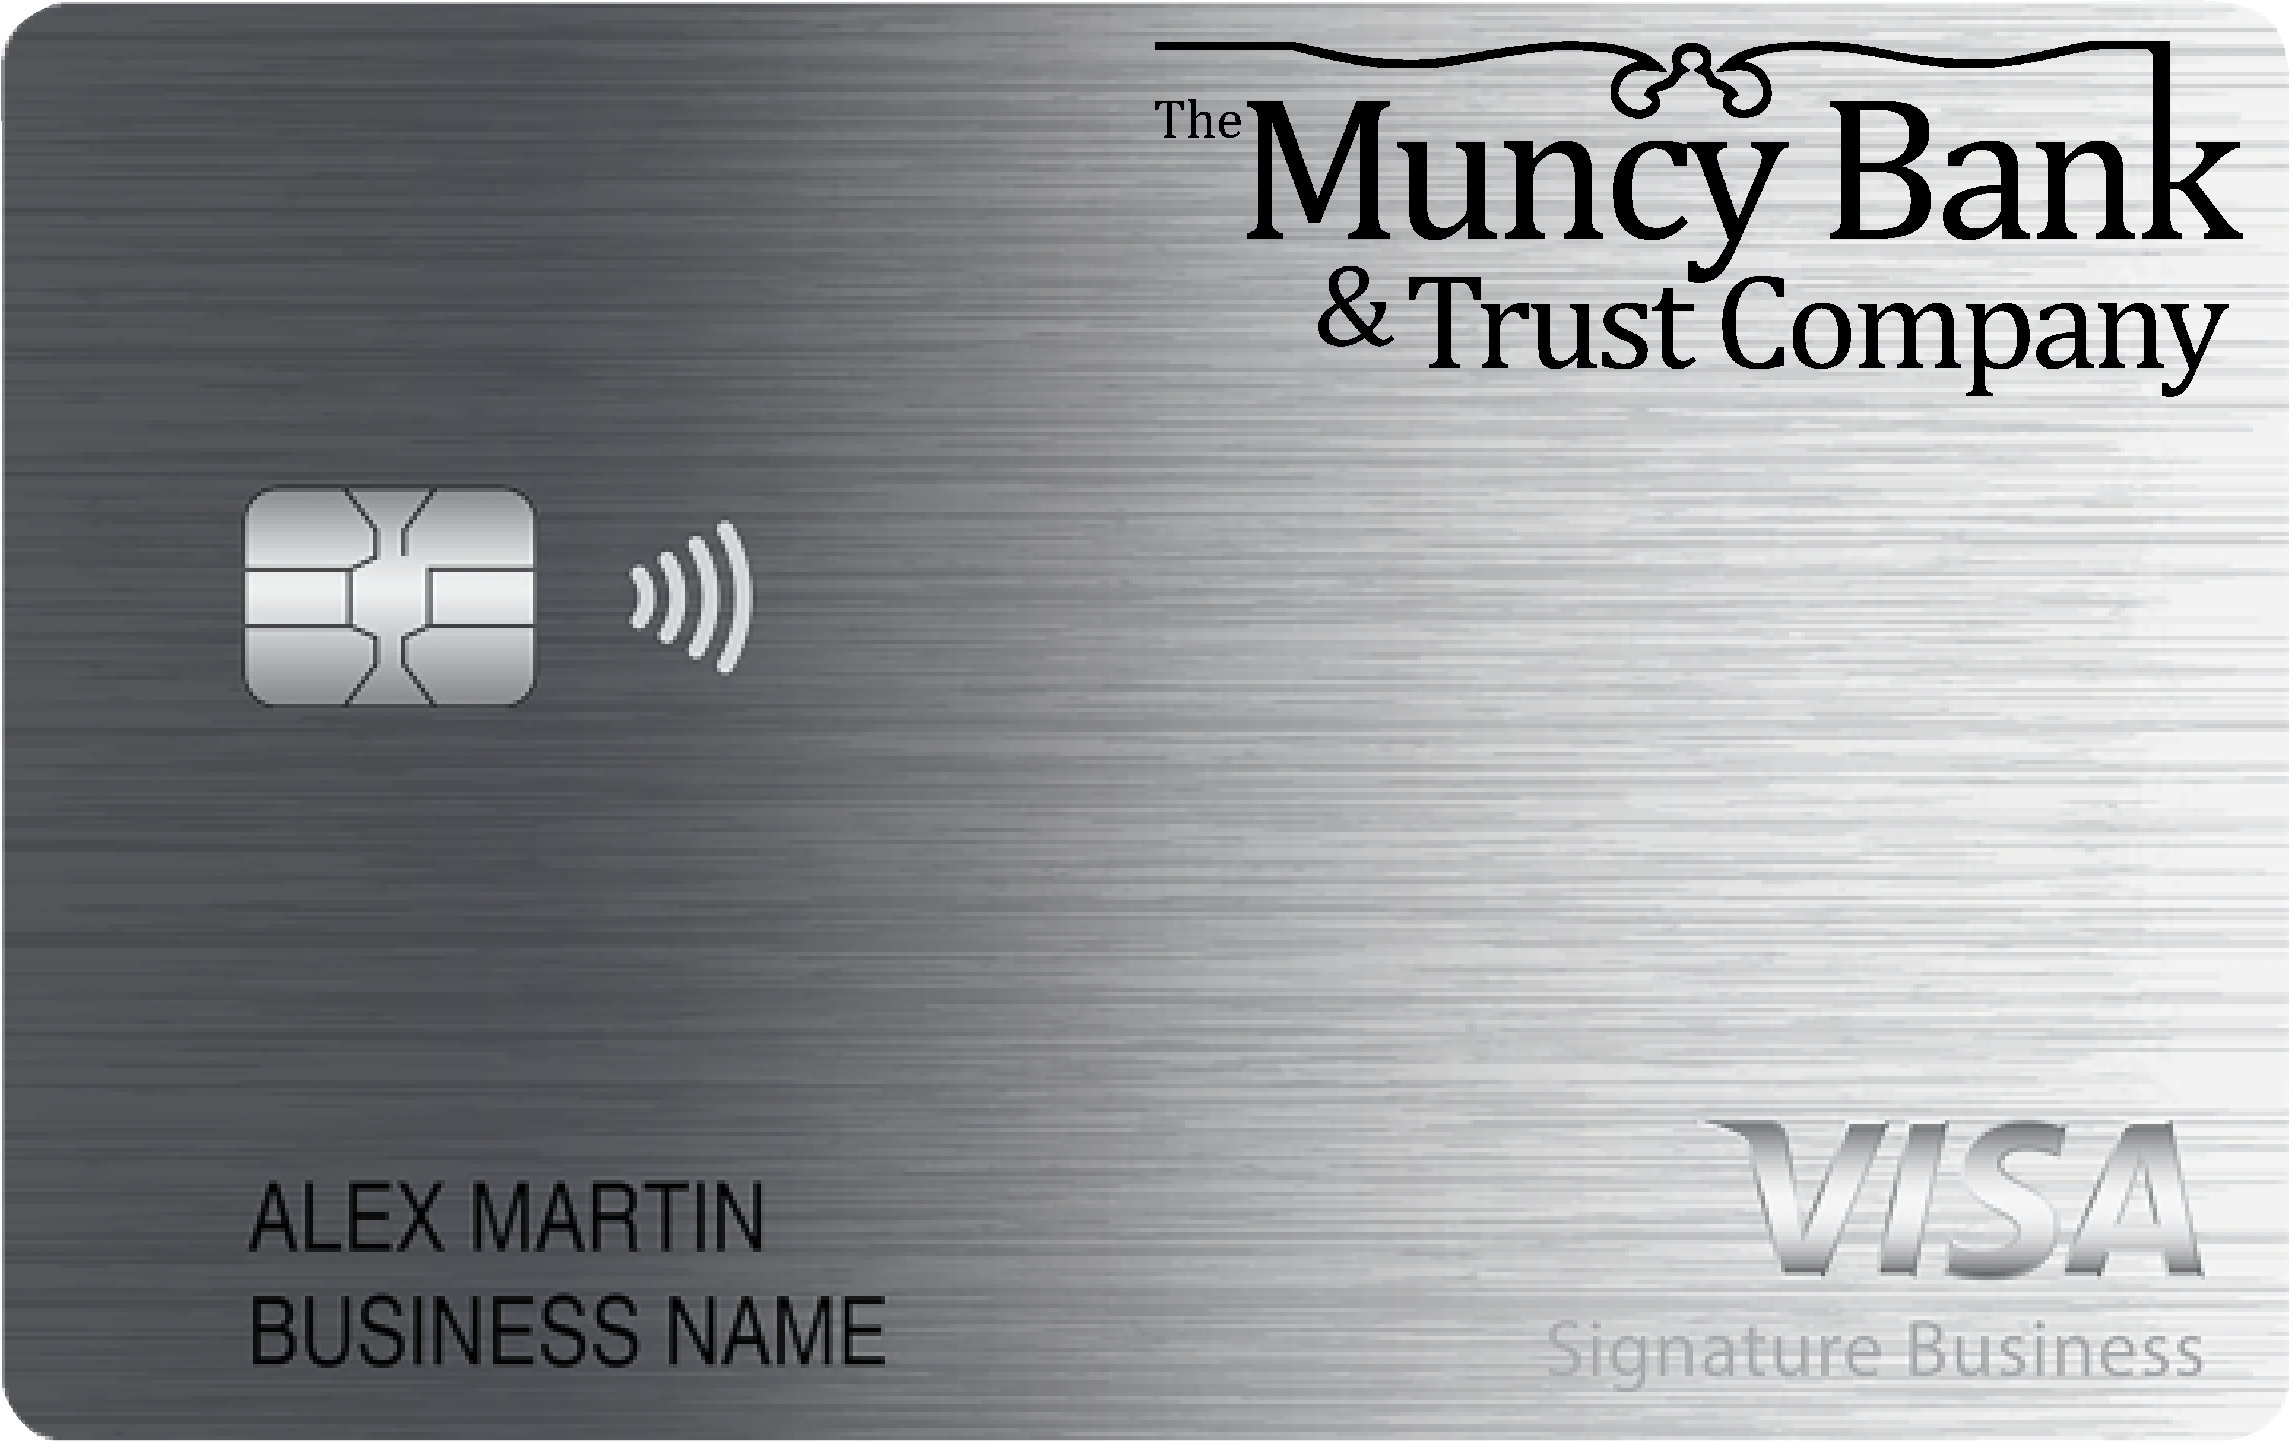 The Muncy Bank & Trust Company Smart Business Rewards Card